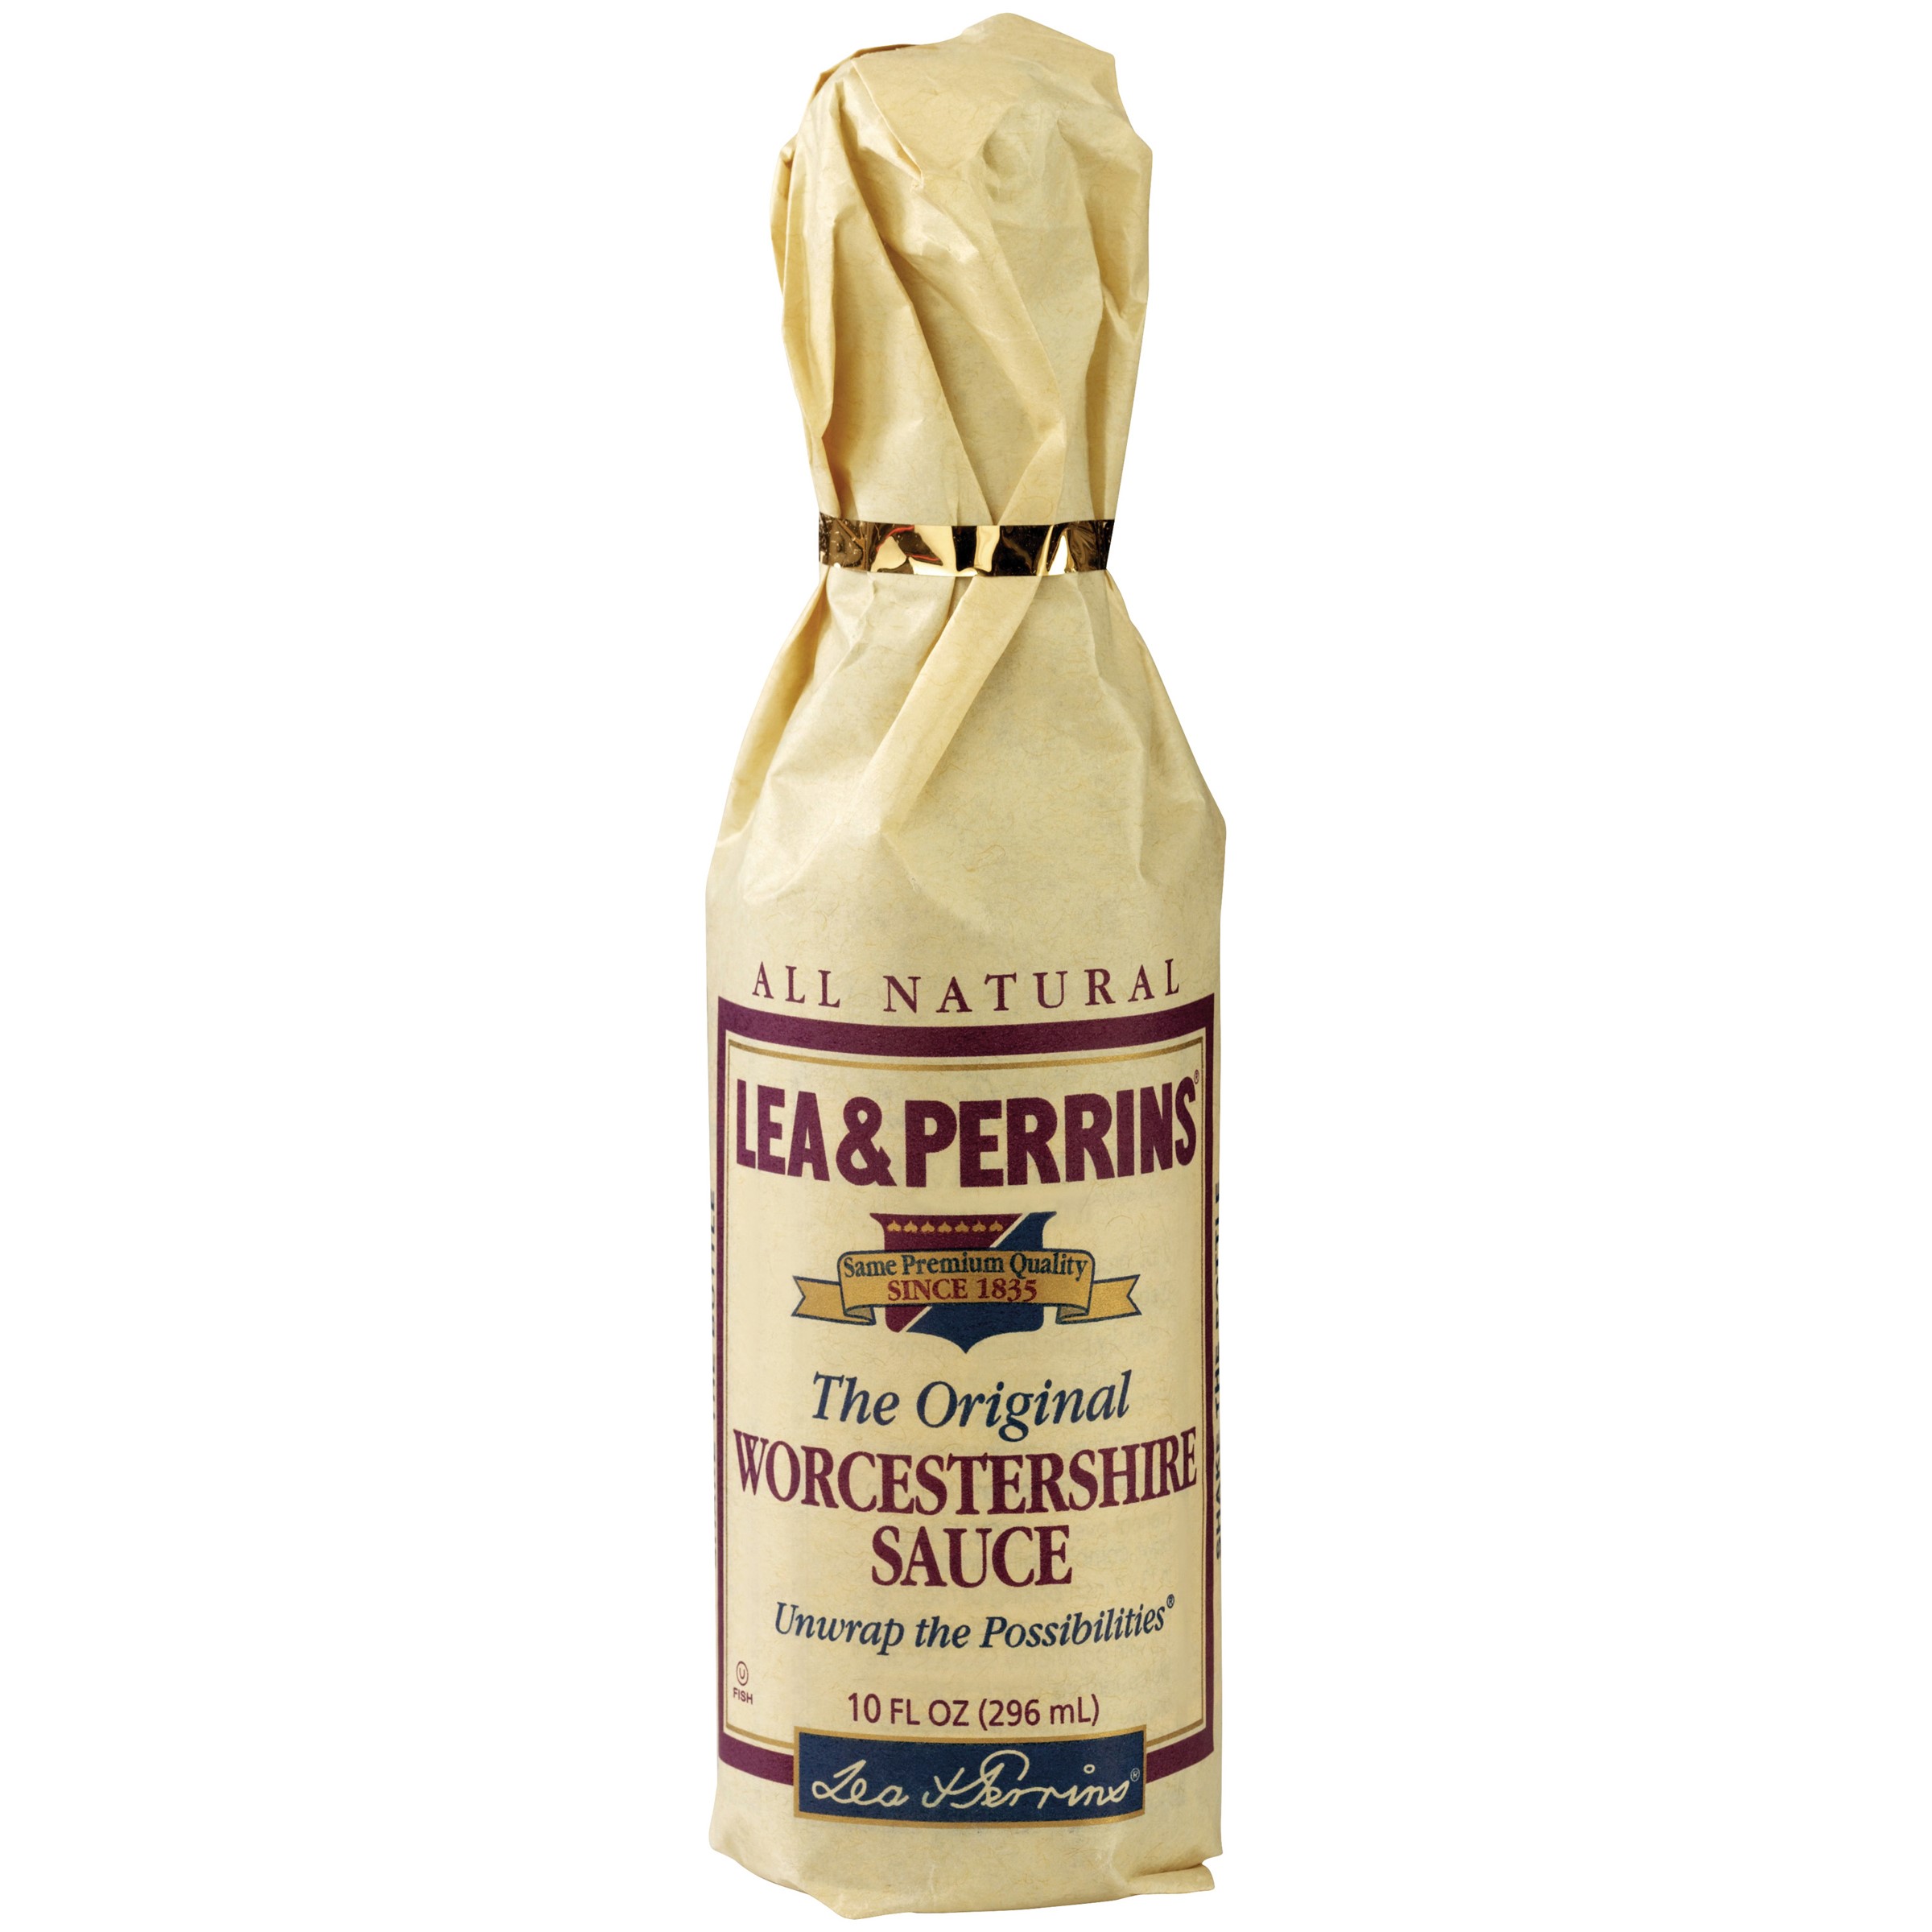 Lea & Perrins The Original Worcestershire Sauce, 10 fl oz Bottle - image 1 of 17